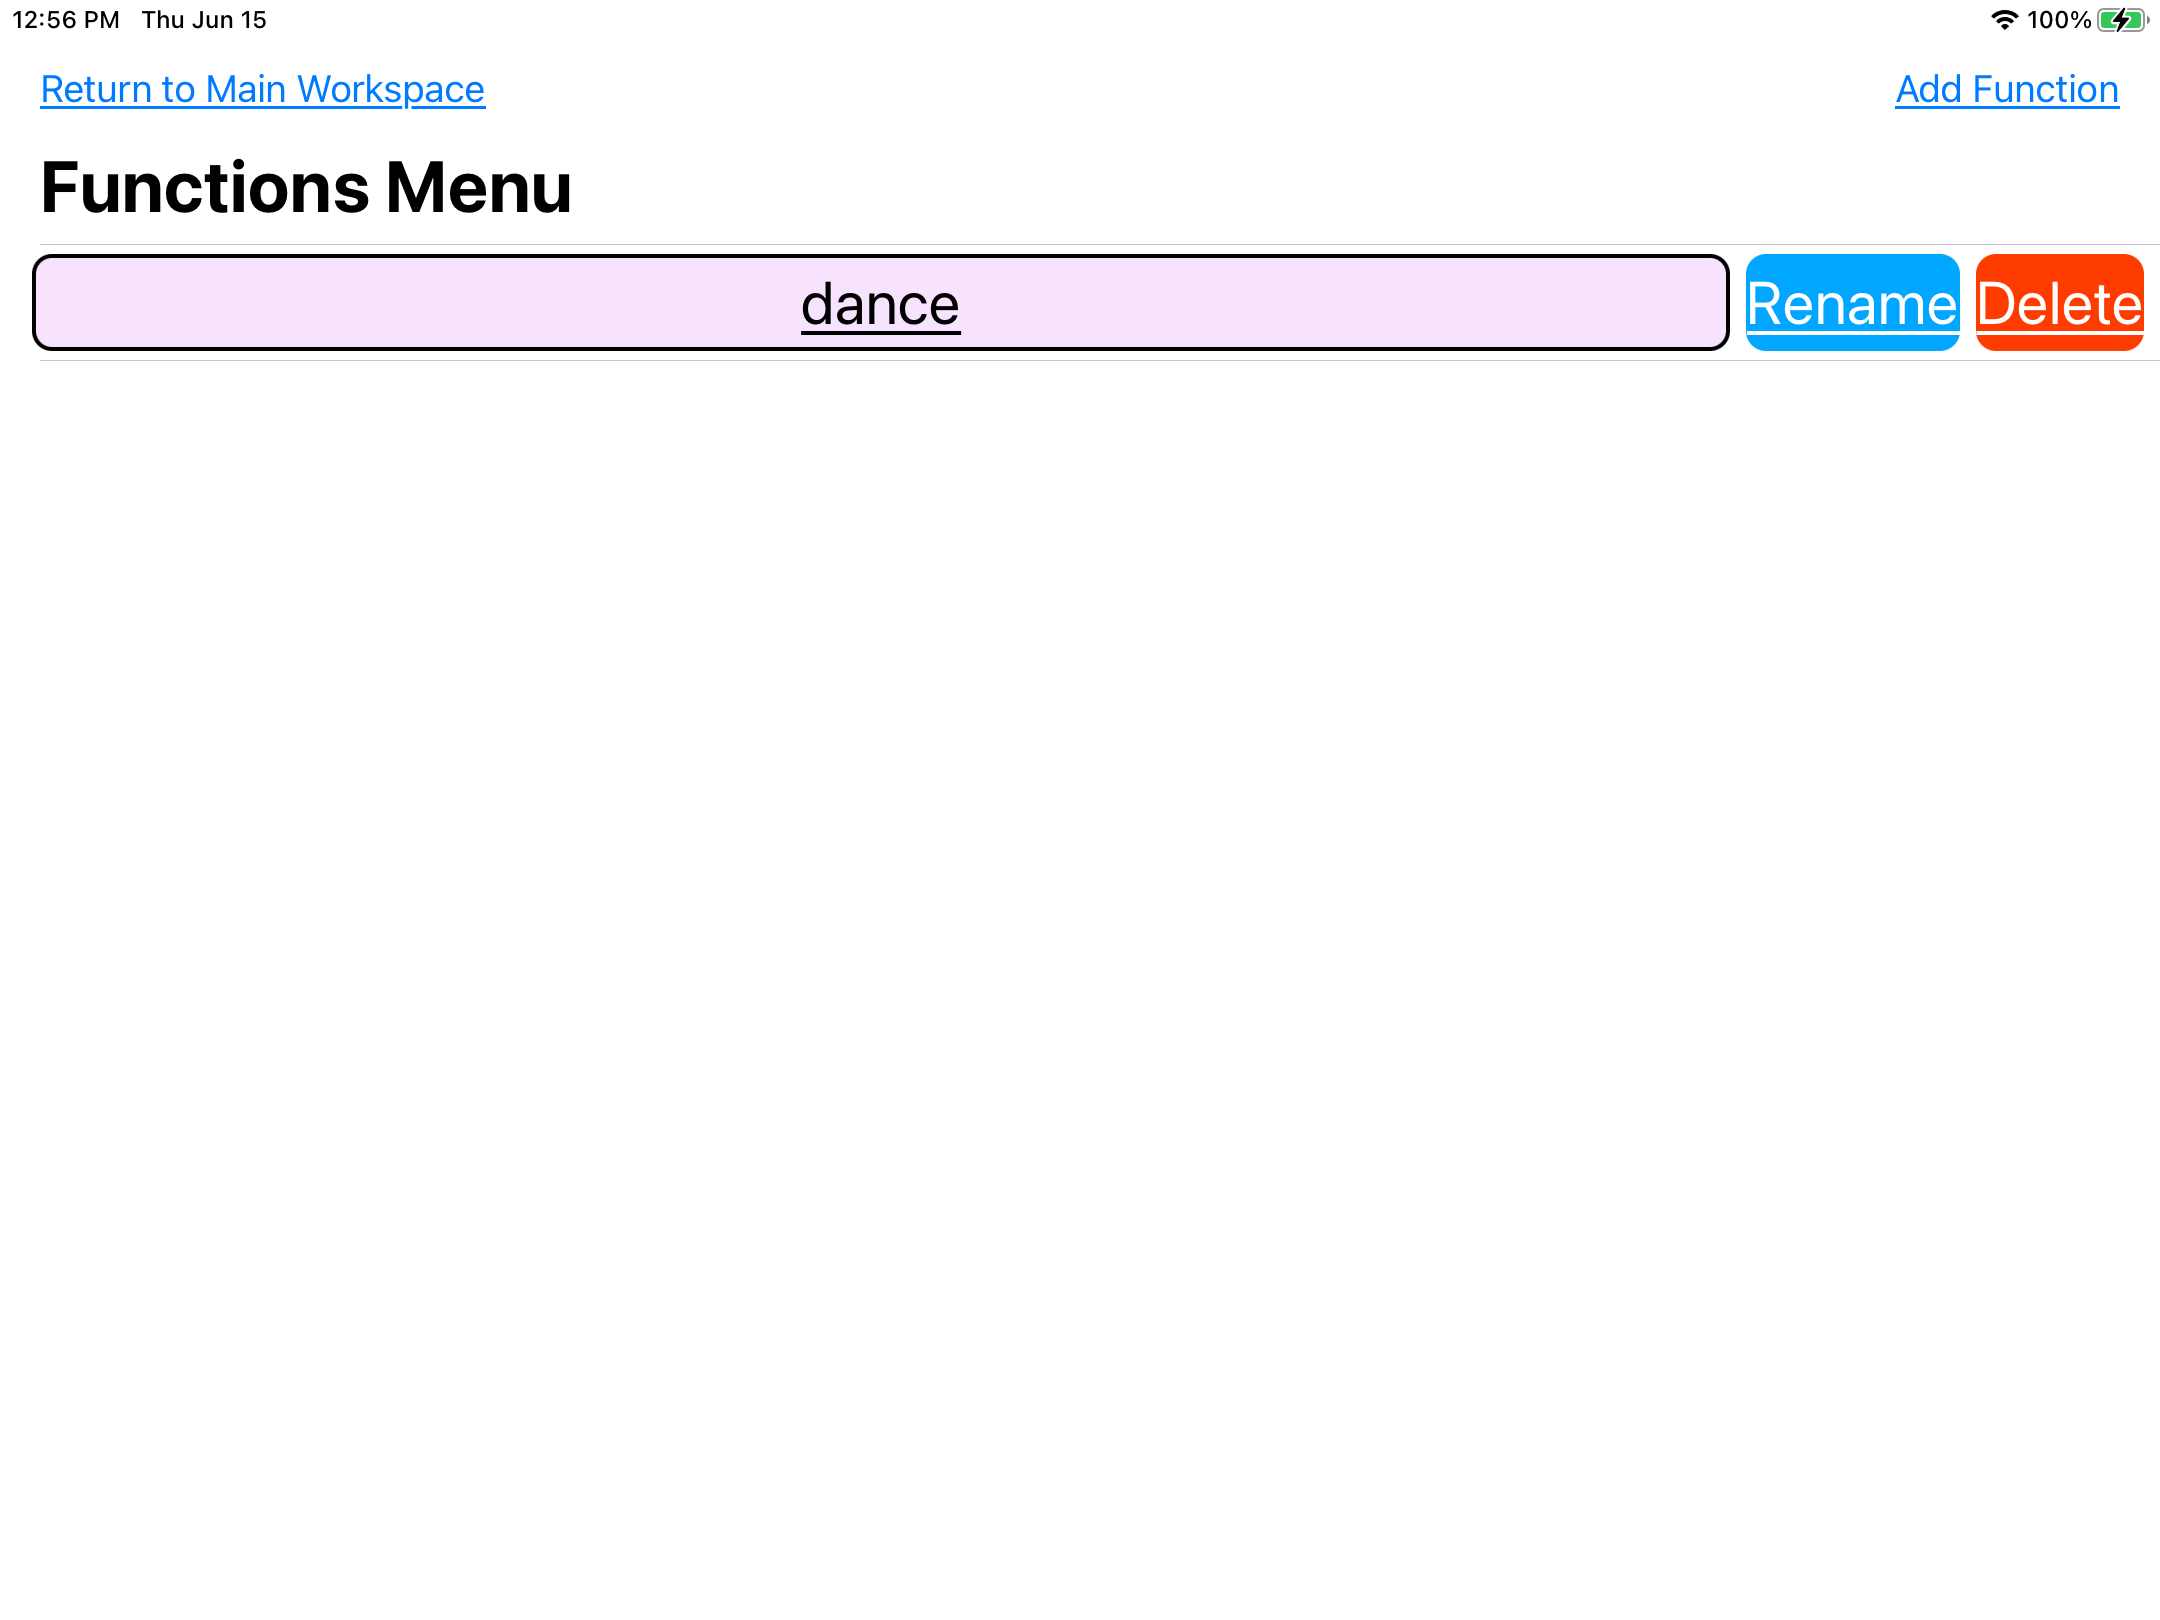 Dance Function Button 